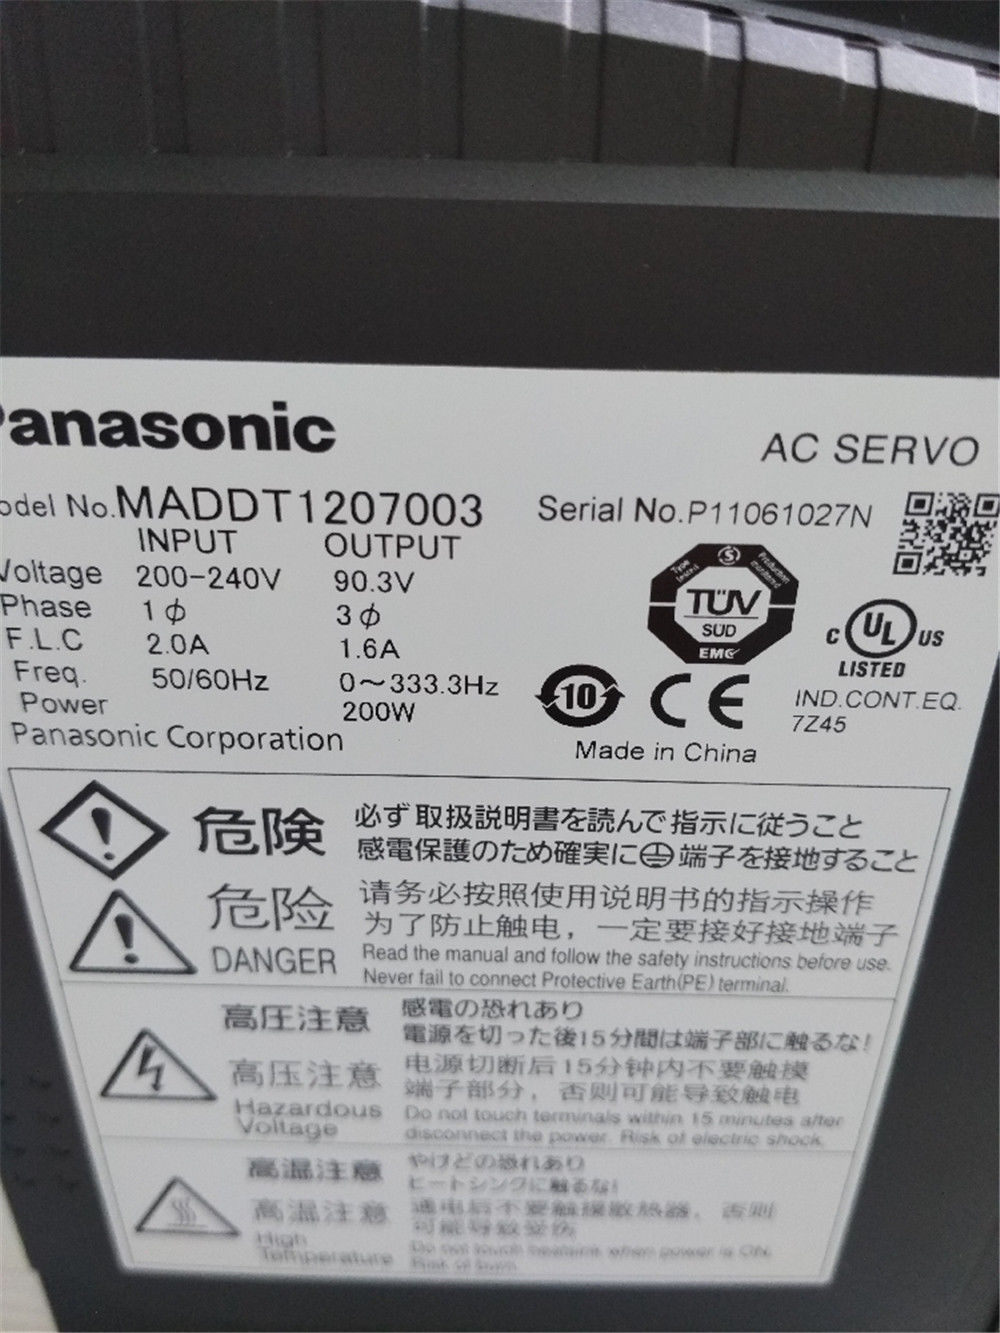 Brand New PANASONIC AC Servo drive MADDT1207003 in box - Click Image to Close